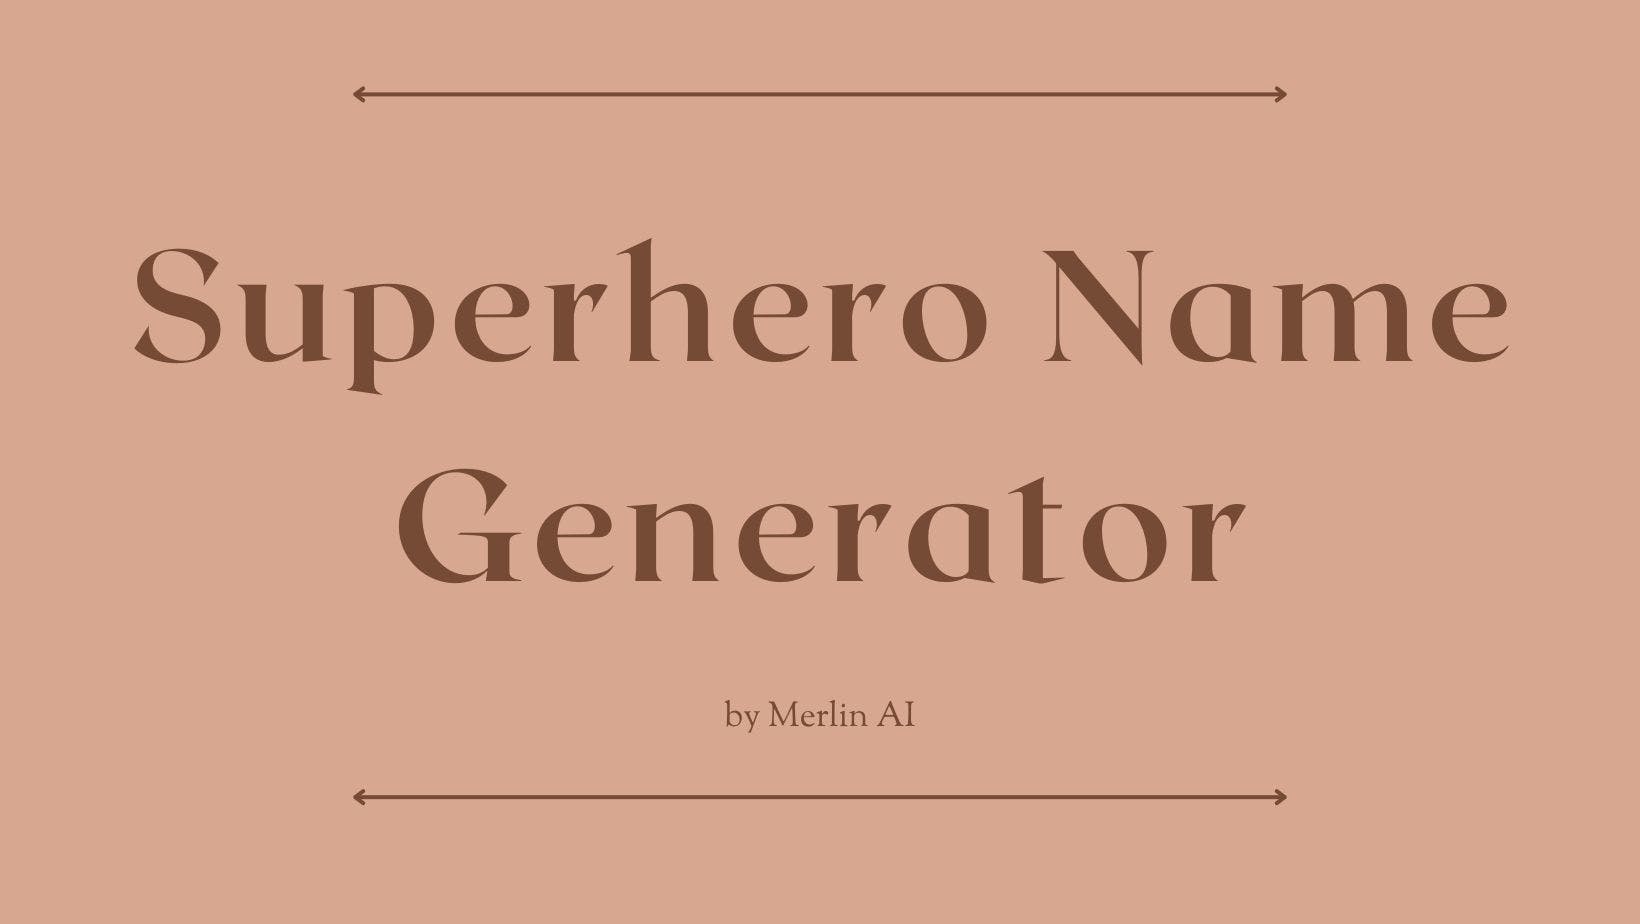 Cover Image for Бесплатный генератор имен супергероев от Merlin AI